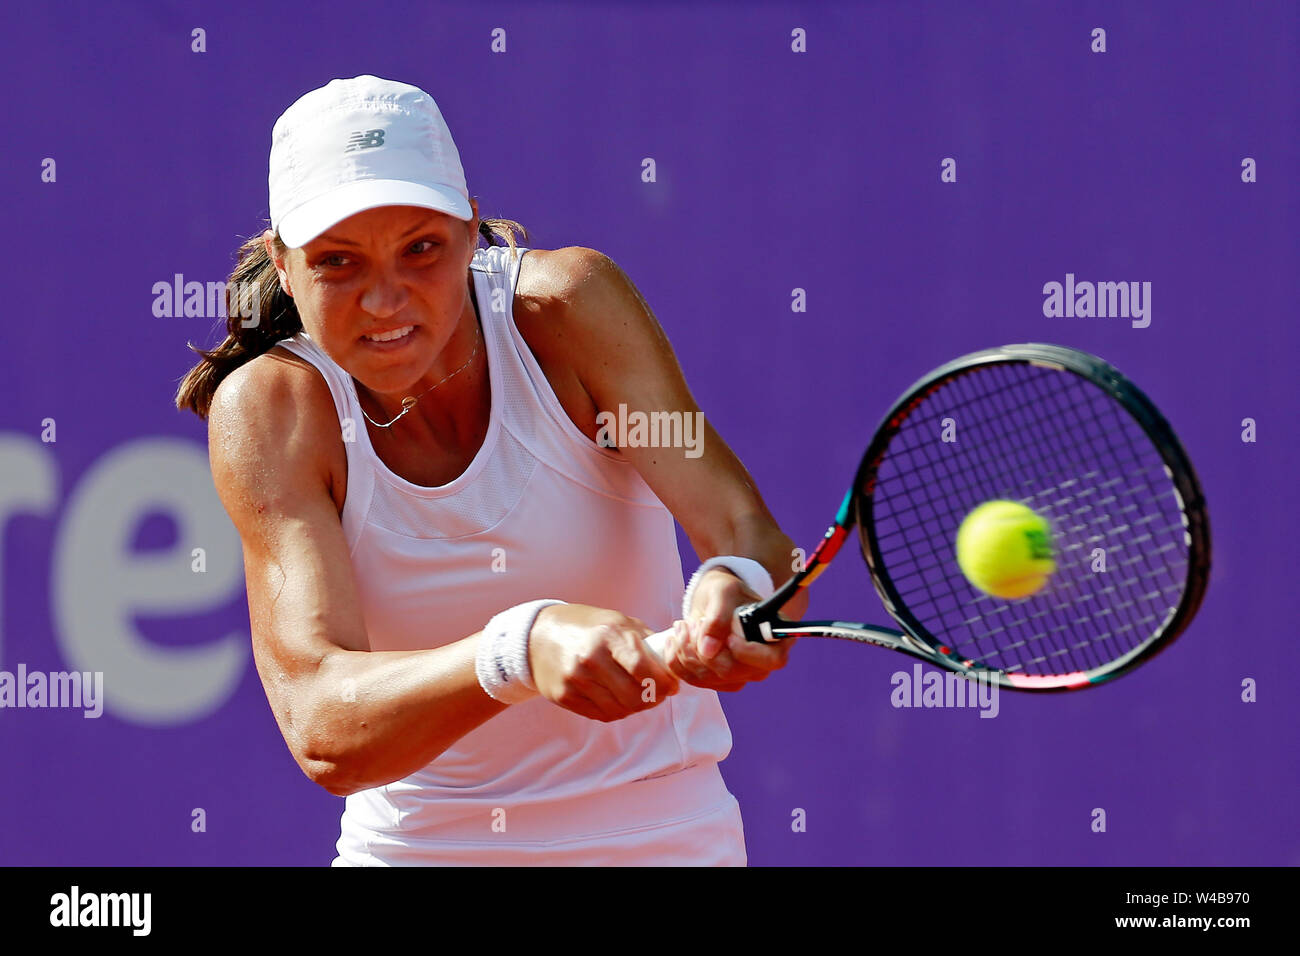 Wta tennis tournament hi-res stock photography and images - Alamy